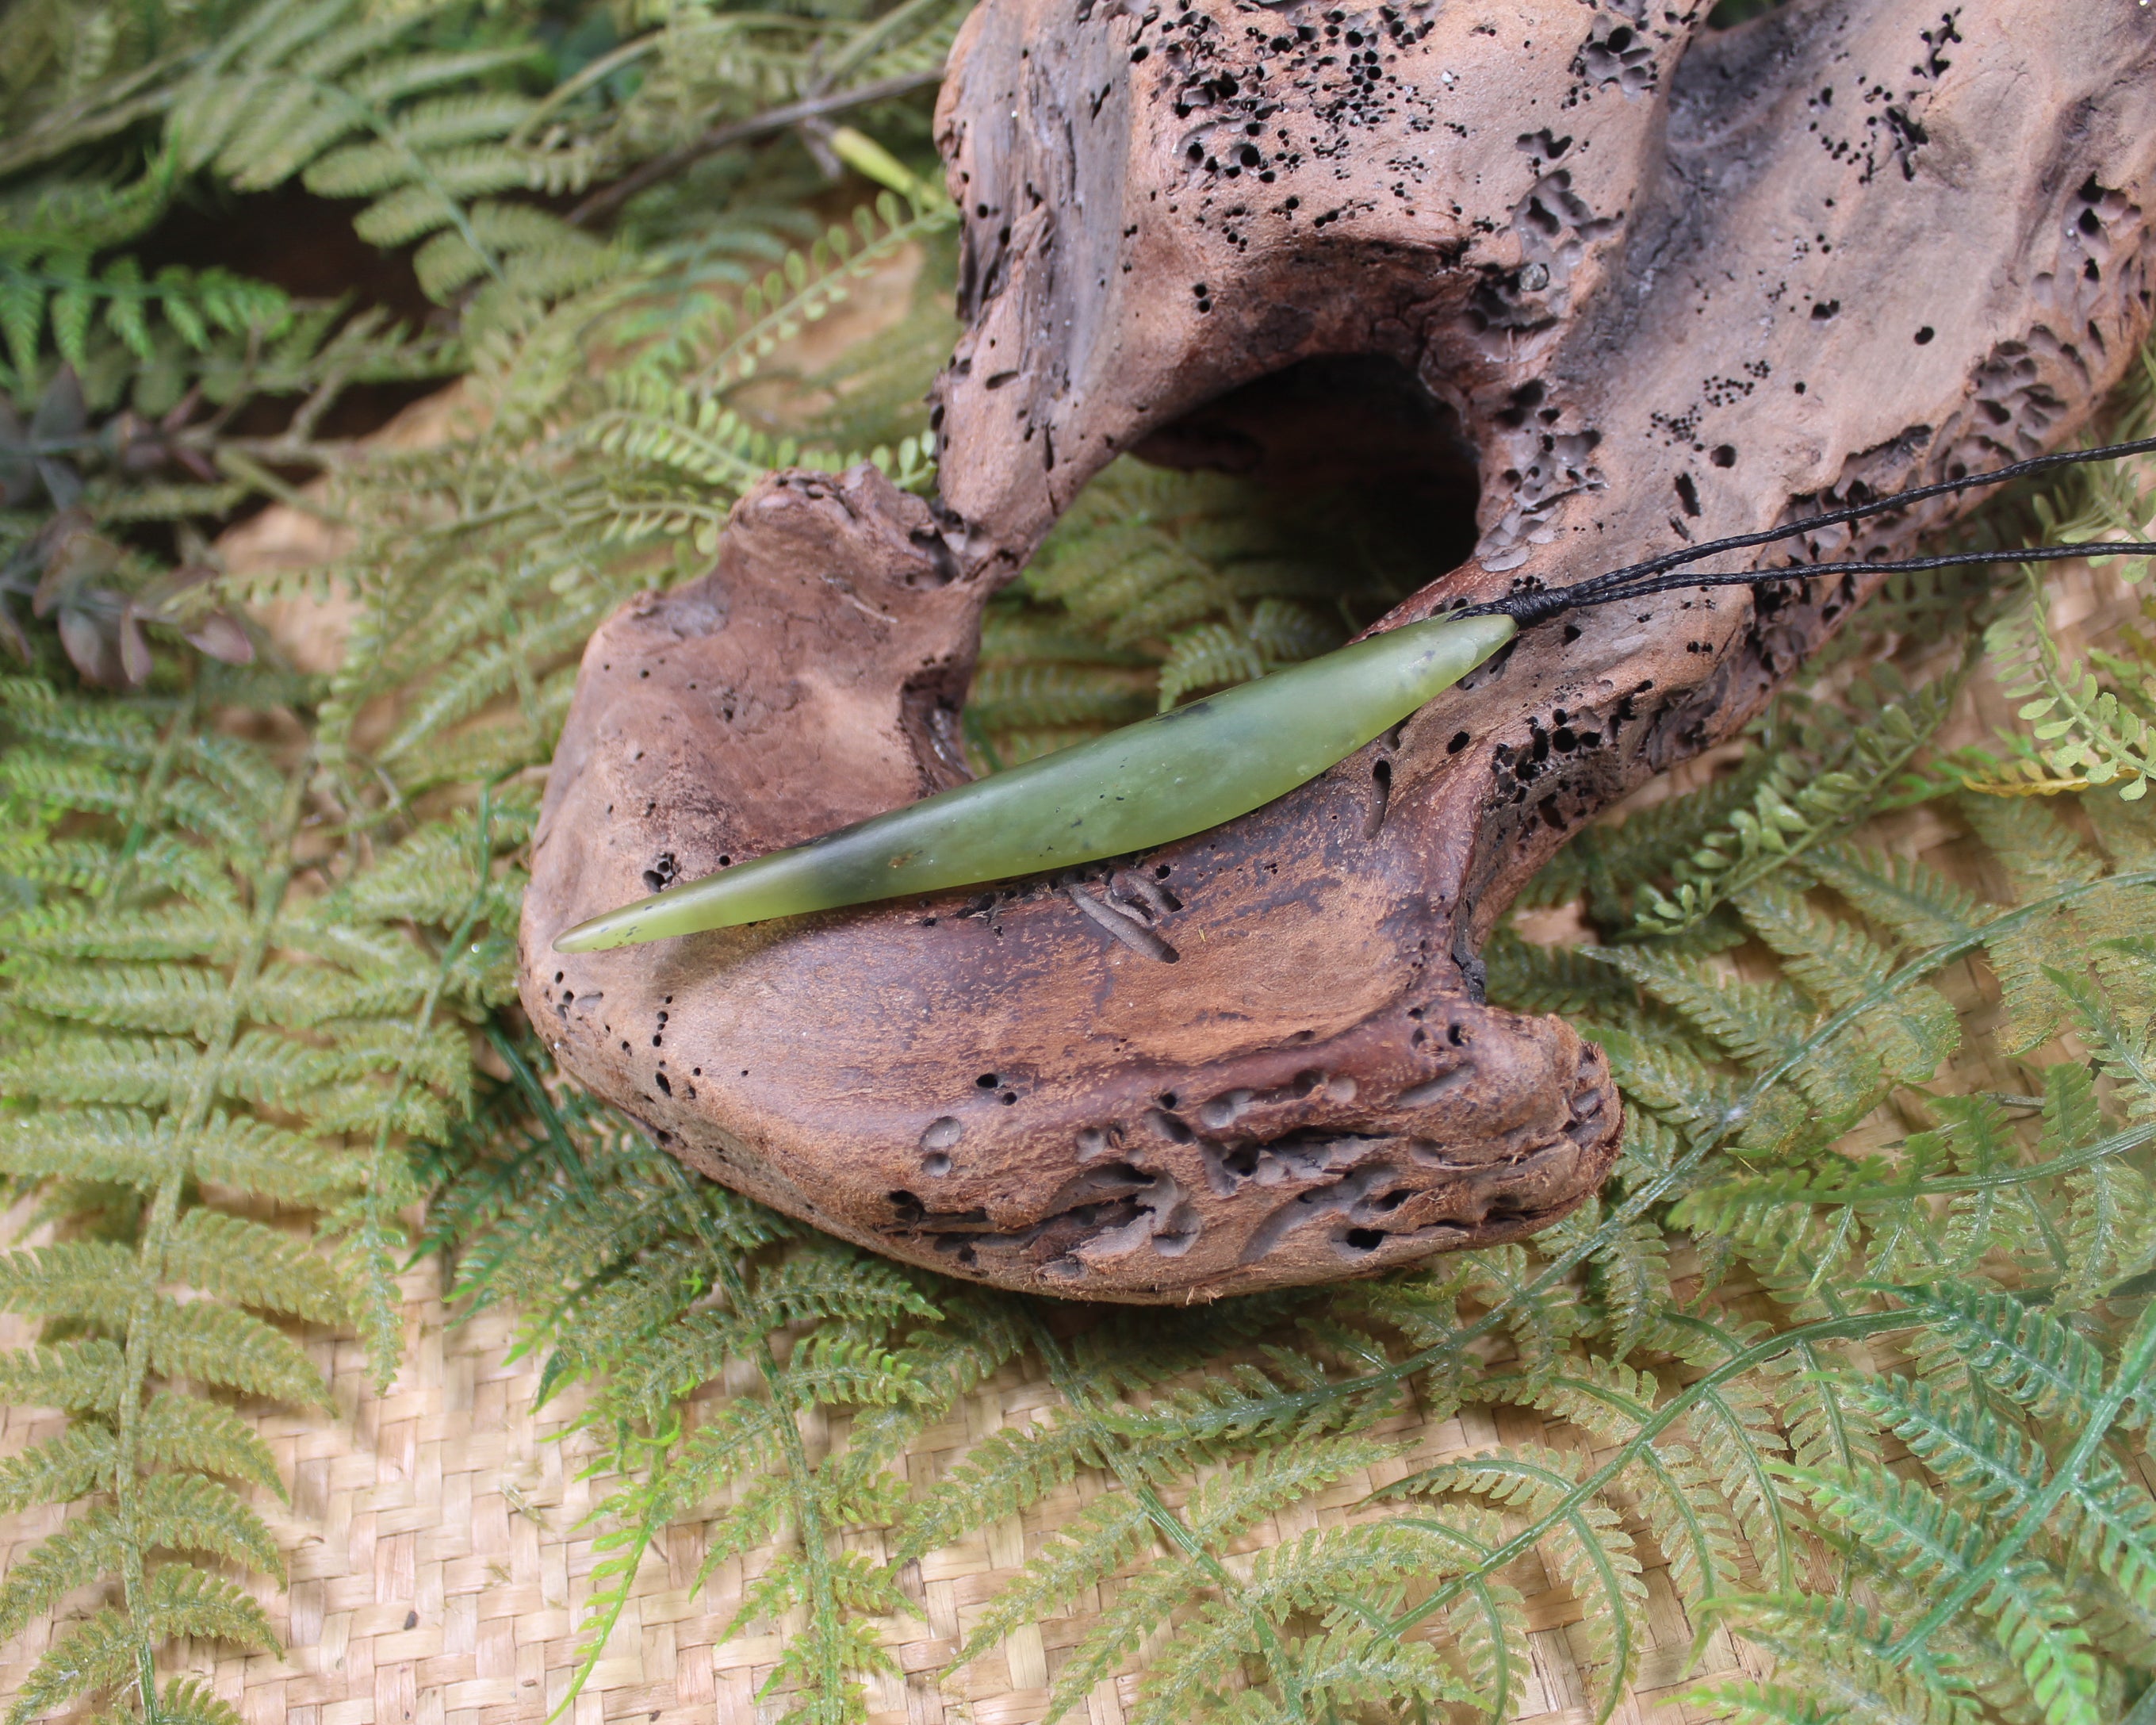 Roimata or Teardrop carved from Tangiwai Pounamu - NZ Greenstone